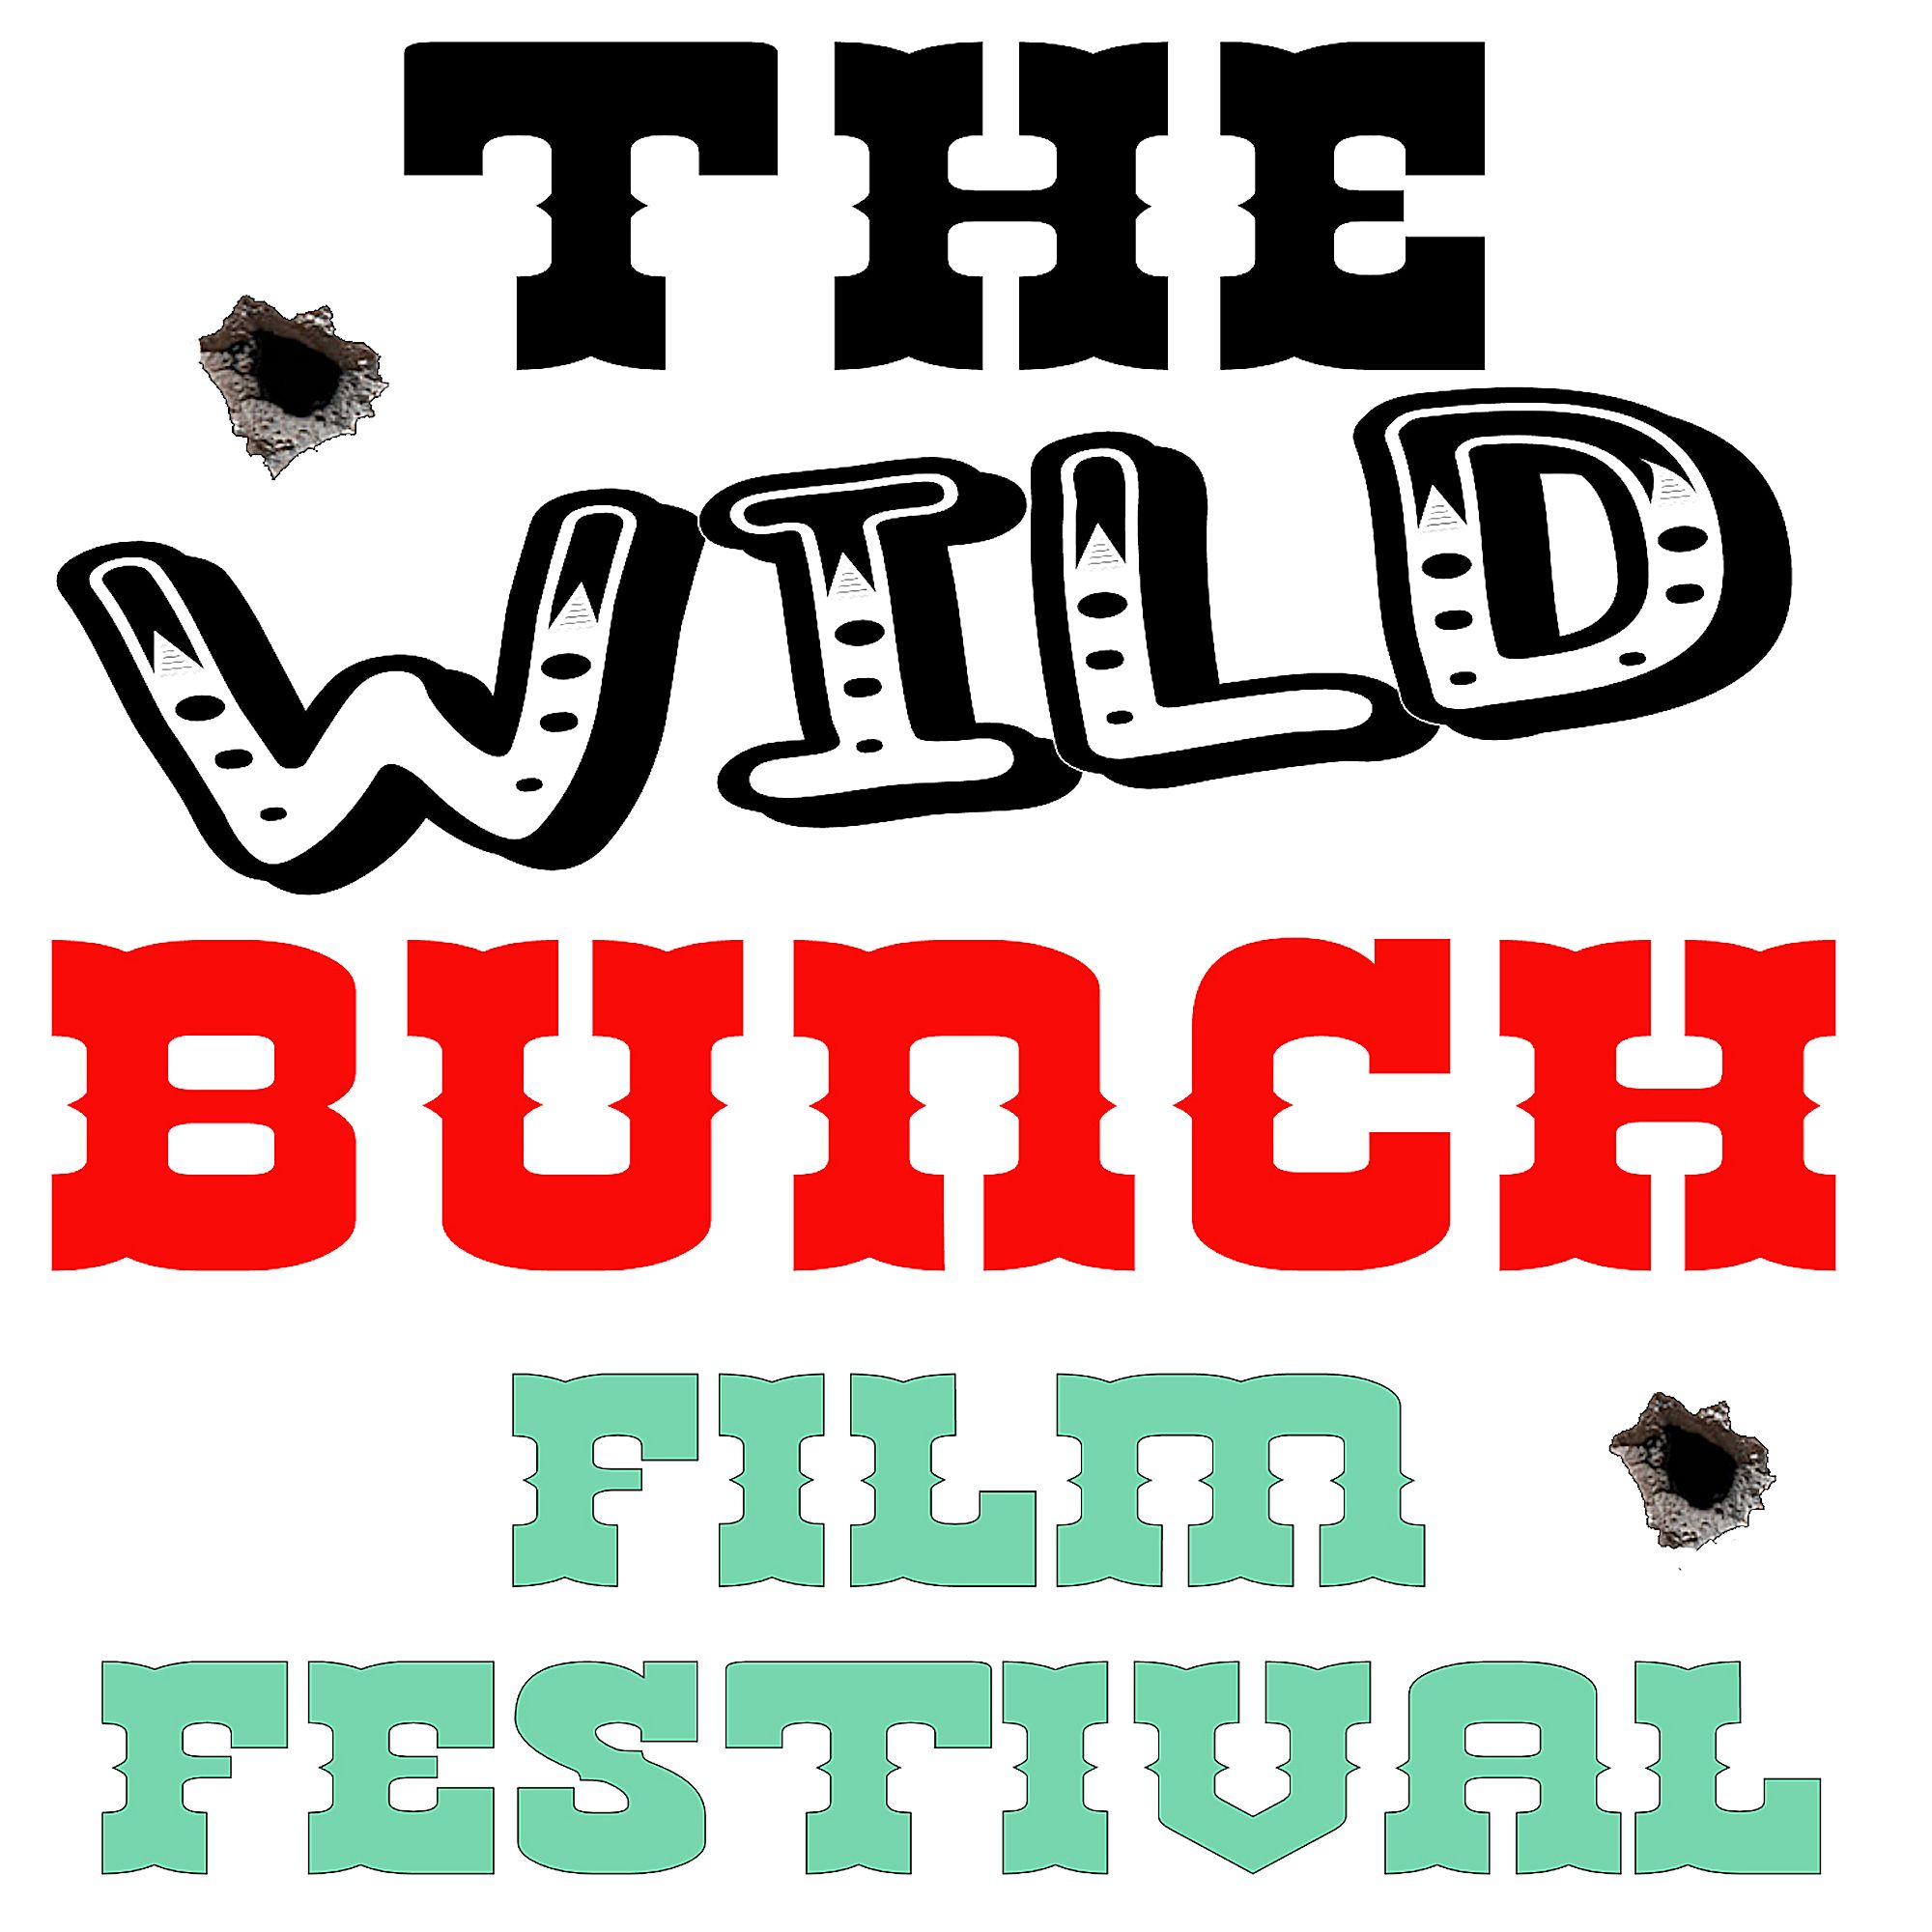 The Wild Bunch Film Festival Logo